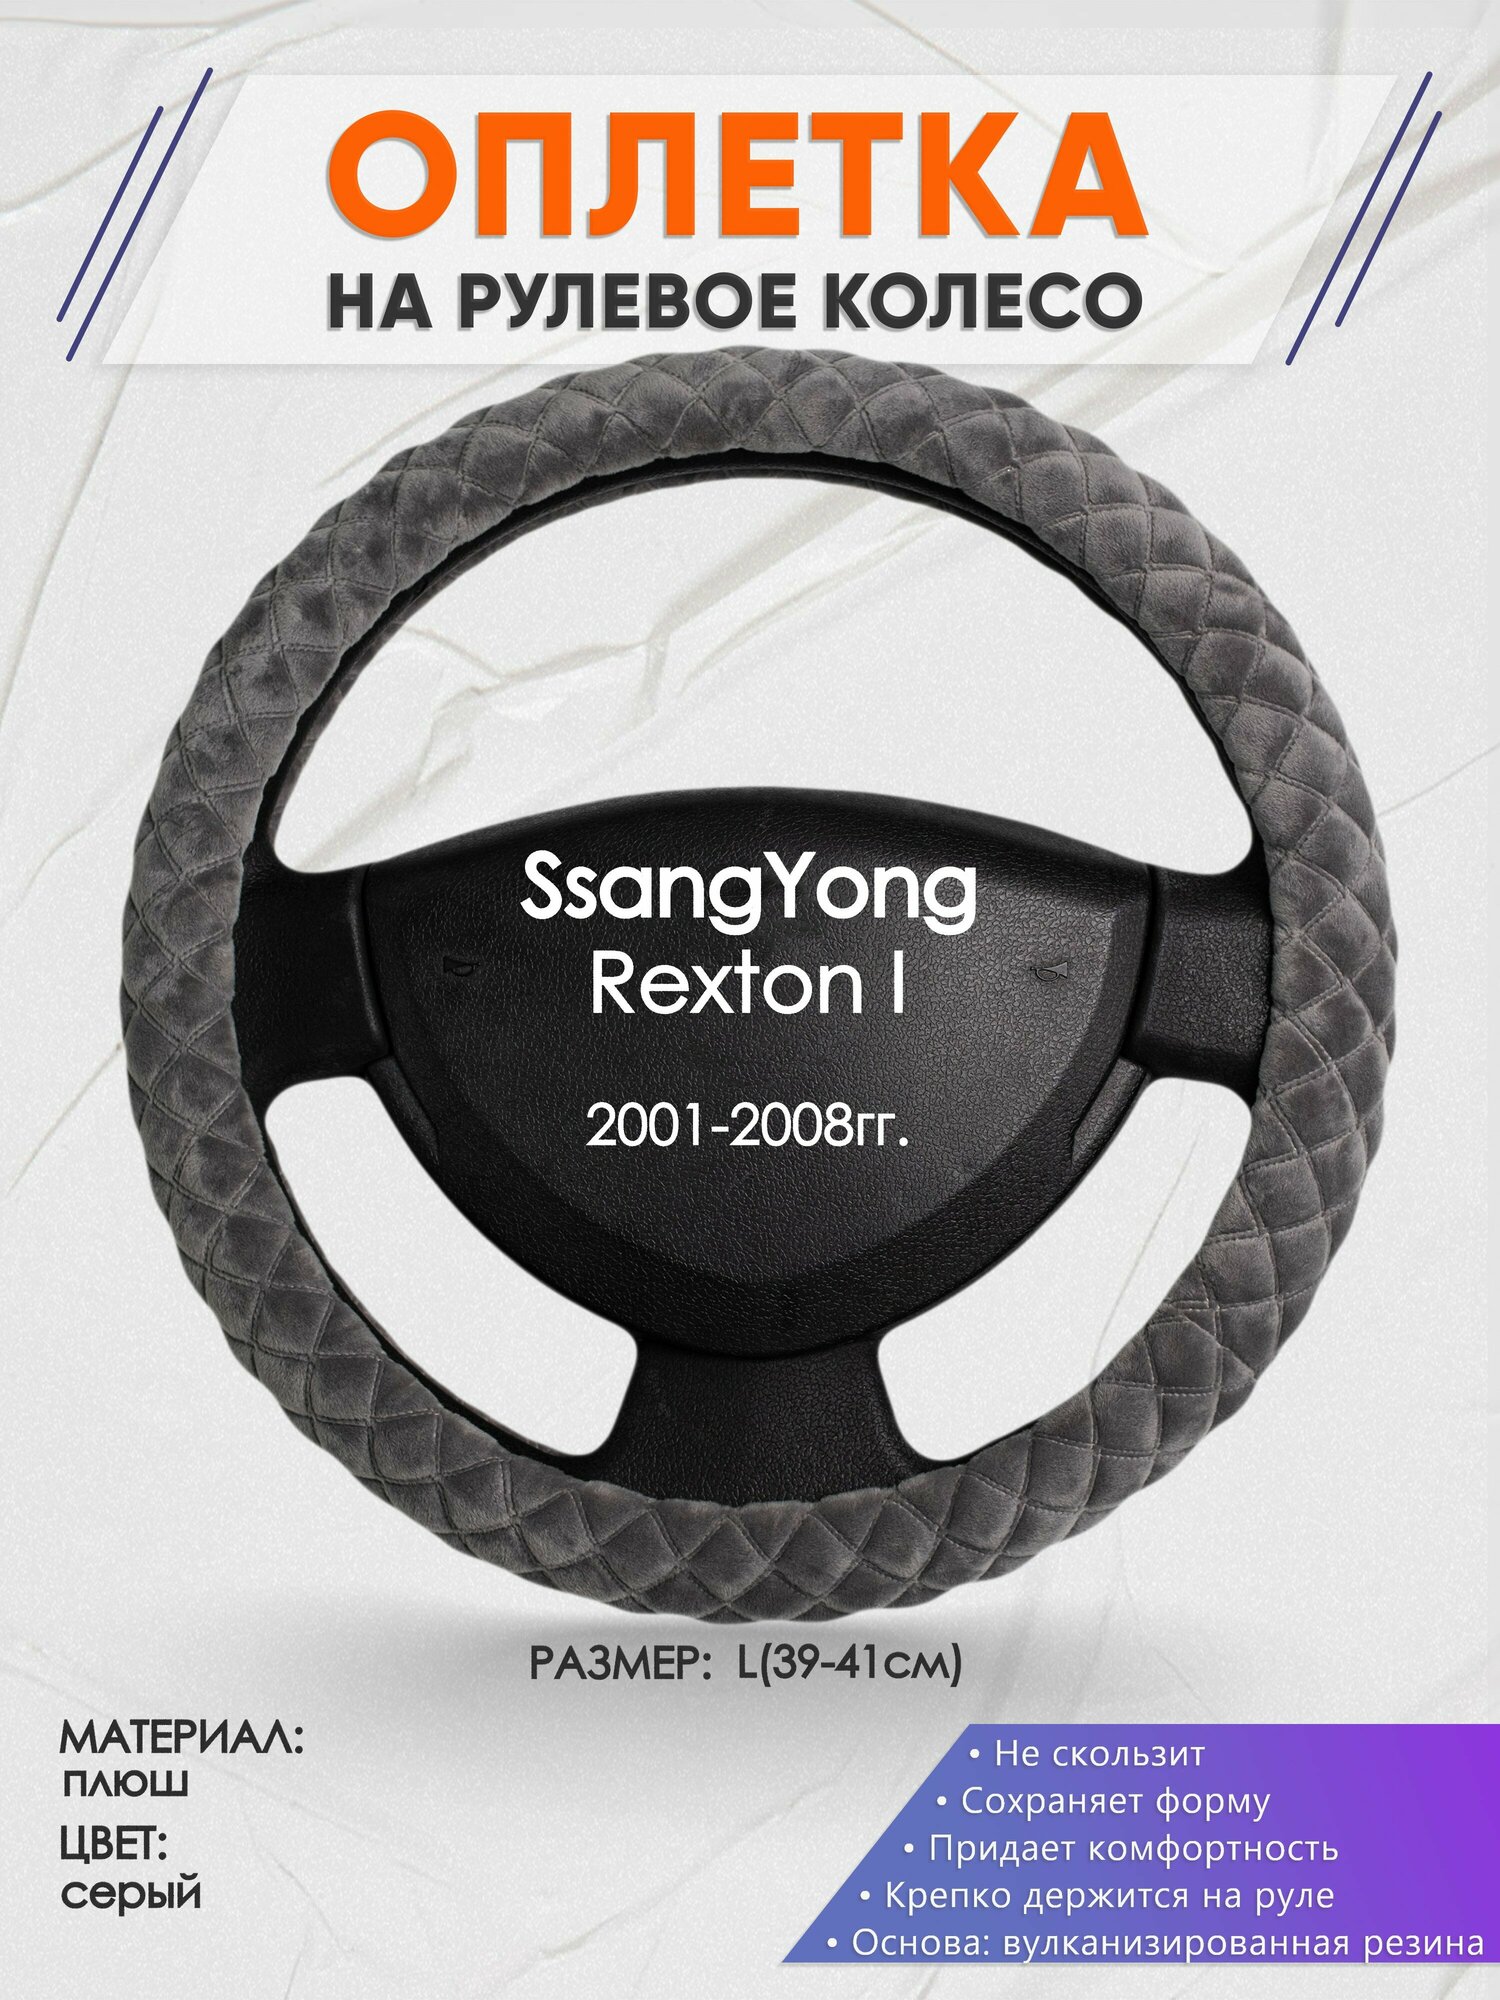 Оплетка на руль для SsangYong Rexton I(Санг Енг Рекстон 1) 2001-2008, L(39-41см), Замша 35